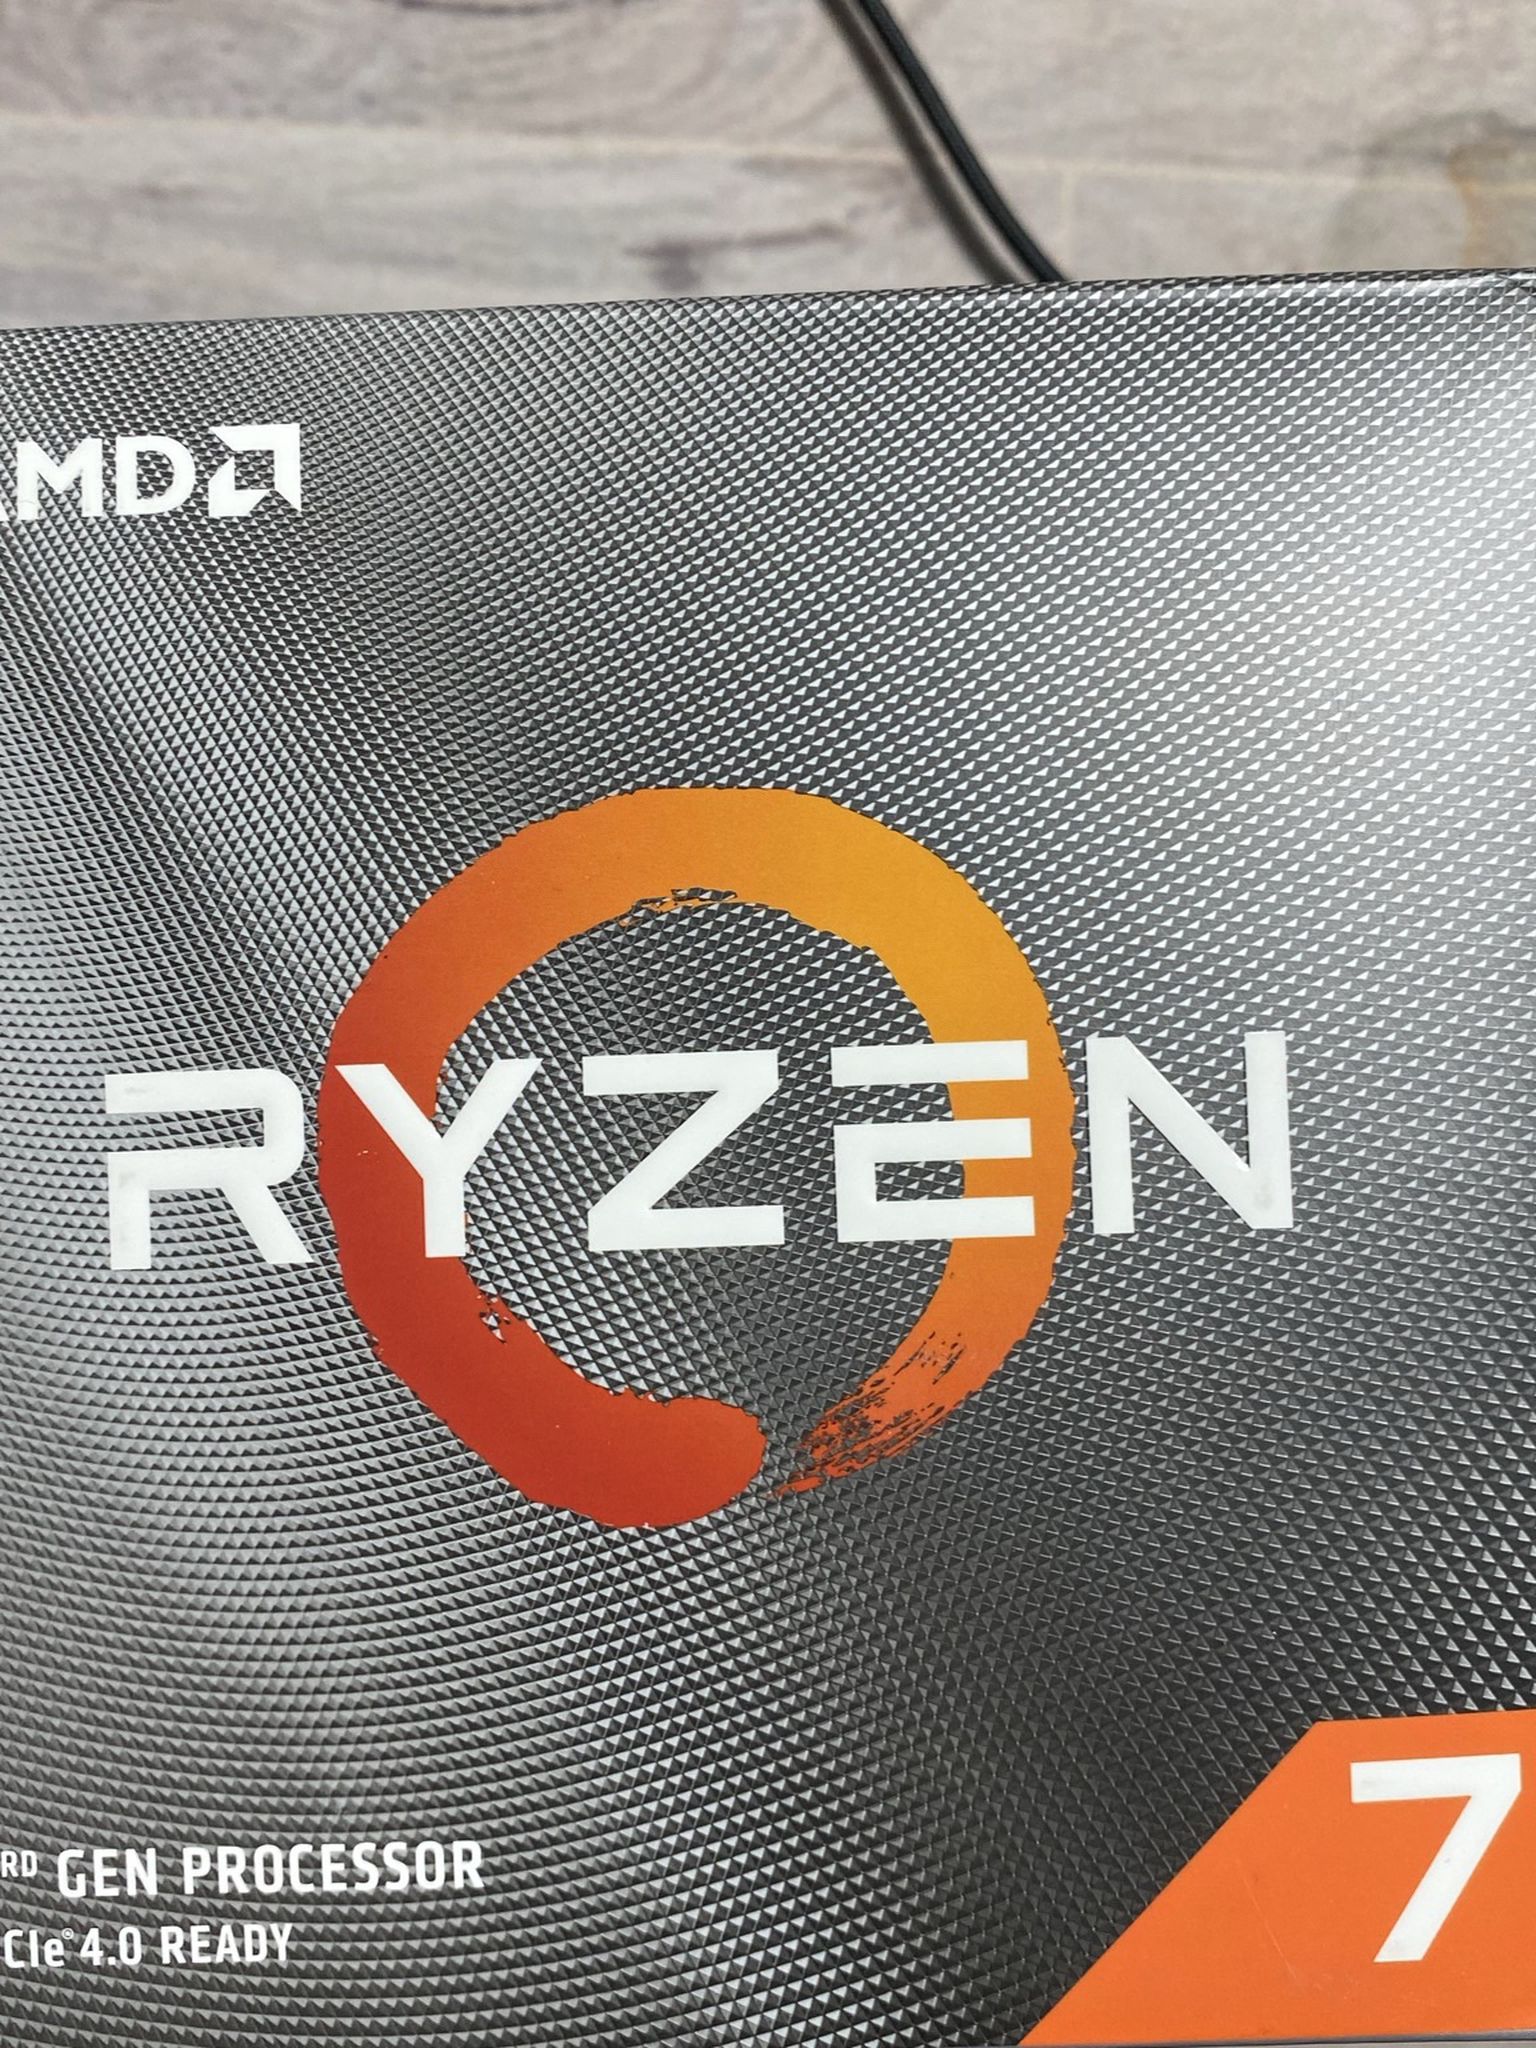 Ryzen 3700x CPU 8 Core, 16 Threads